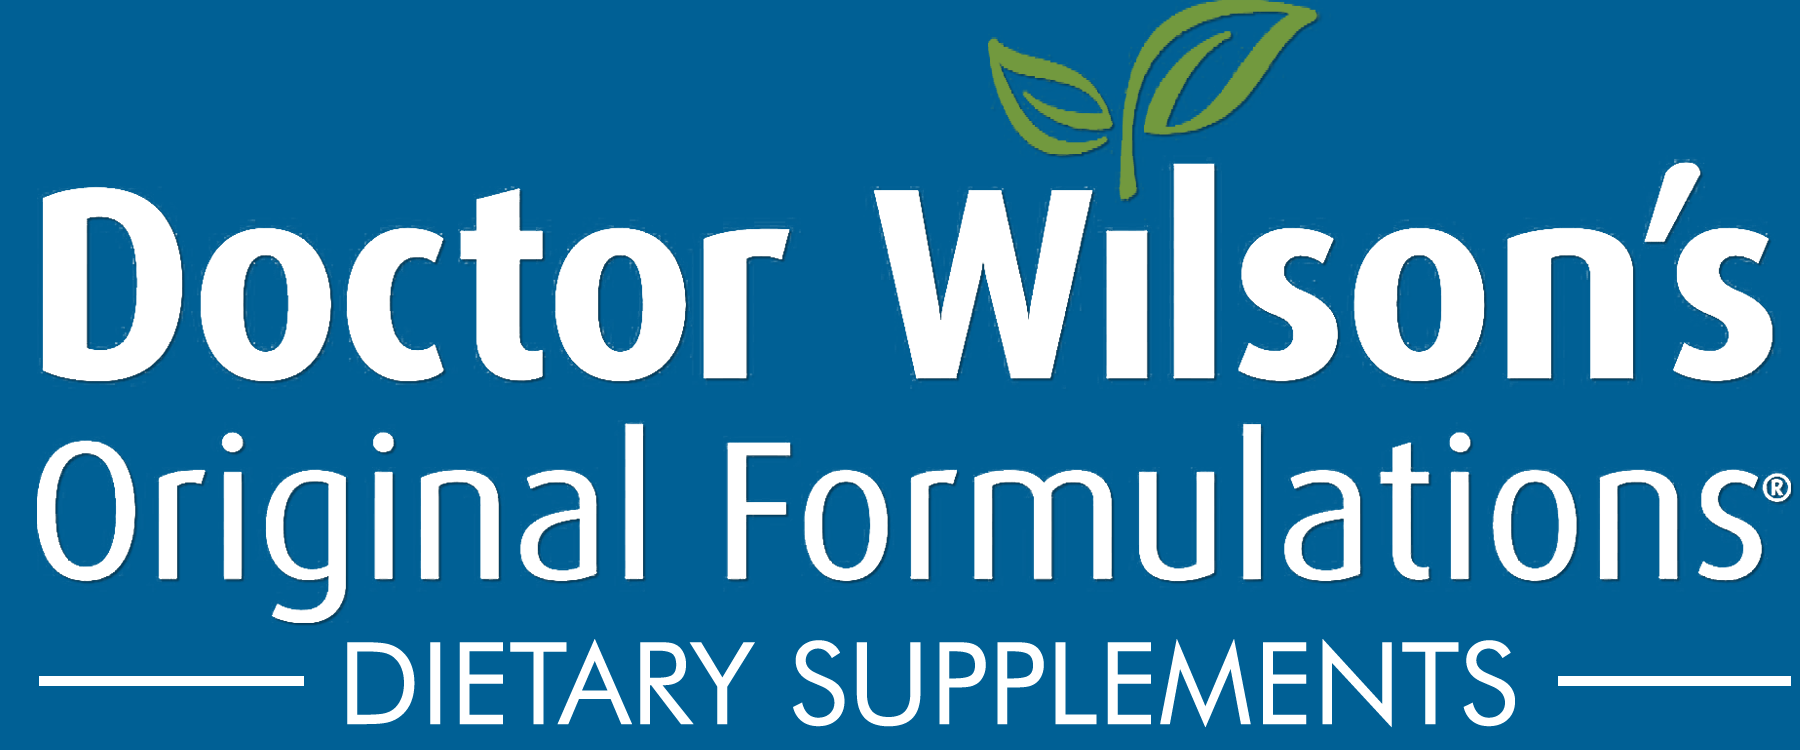 Doctor Wilson's Original Formulations